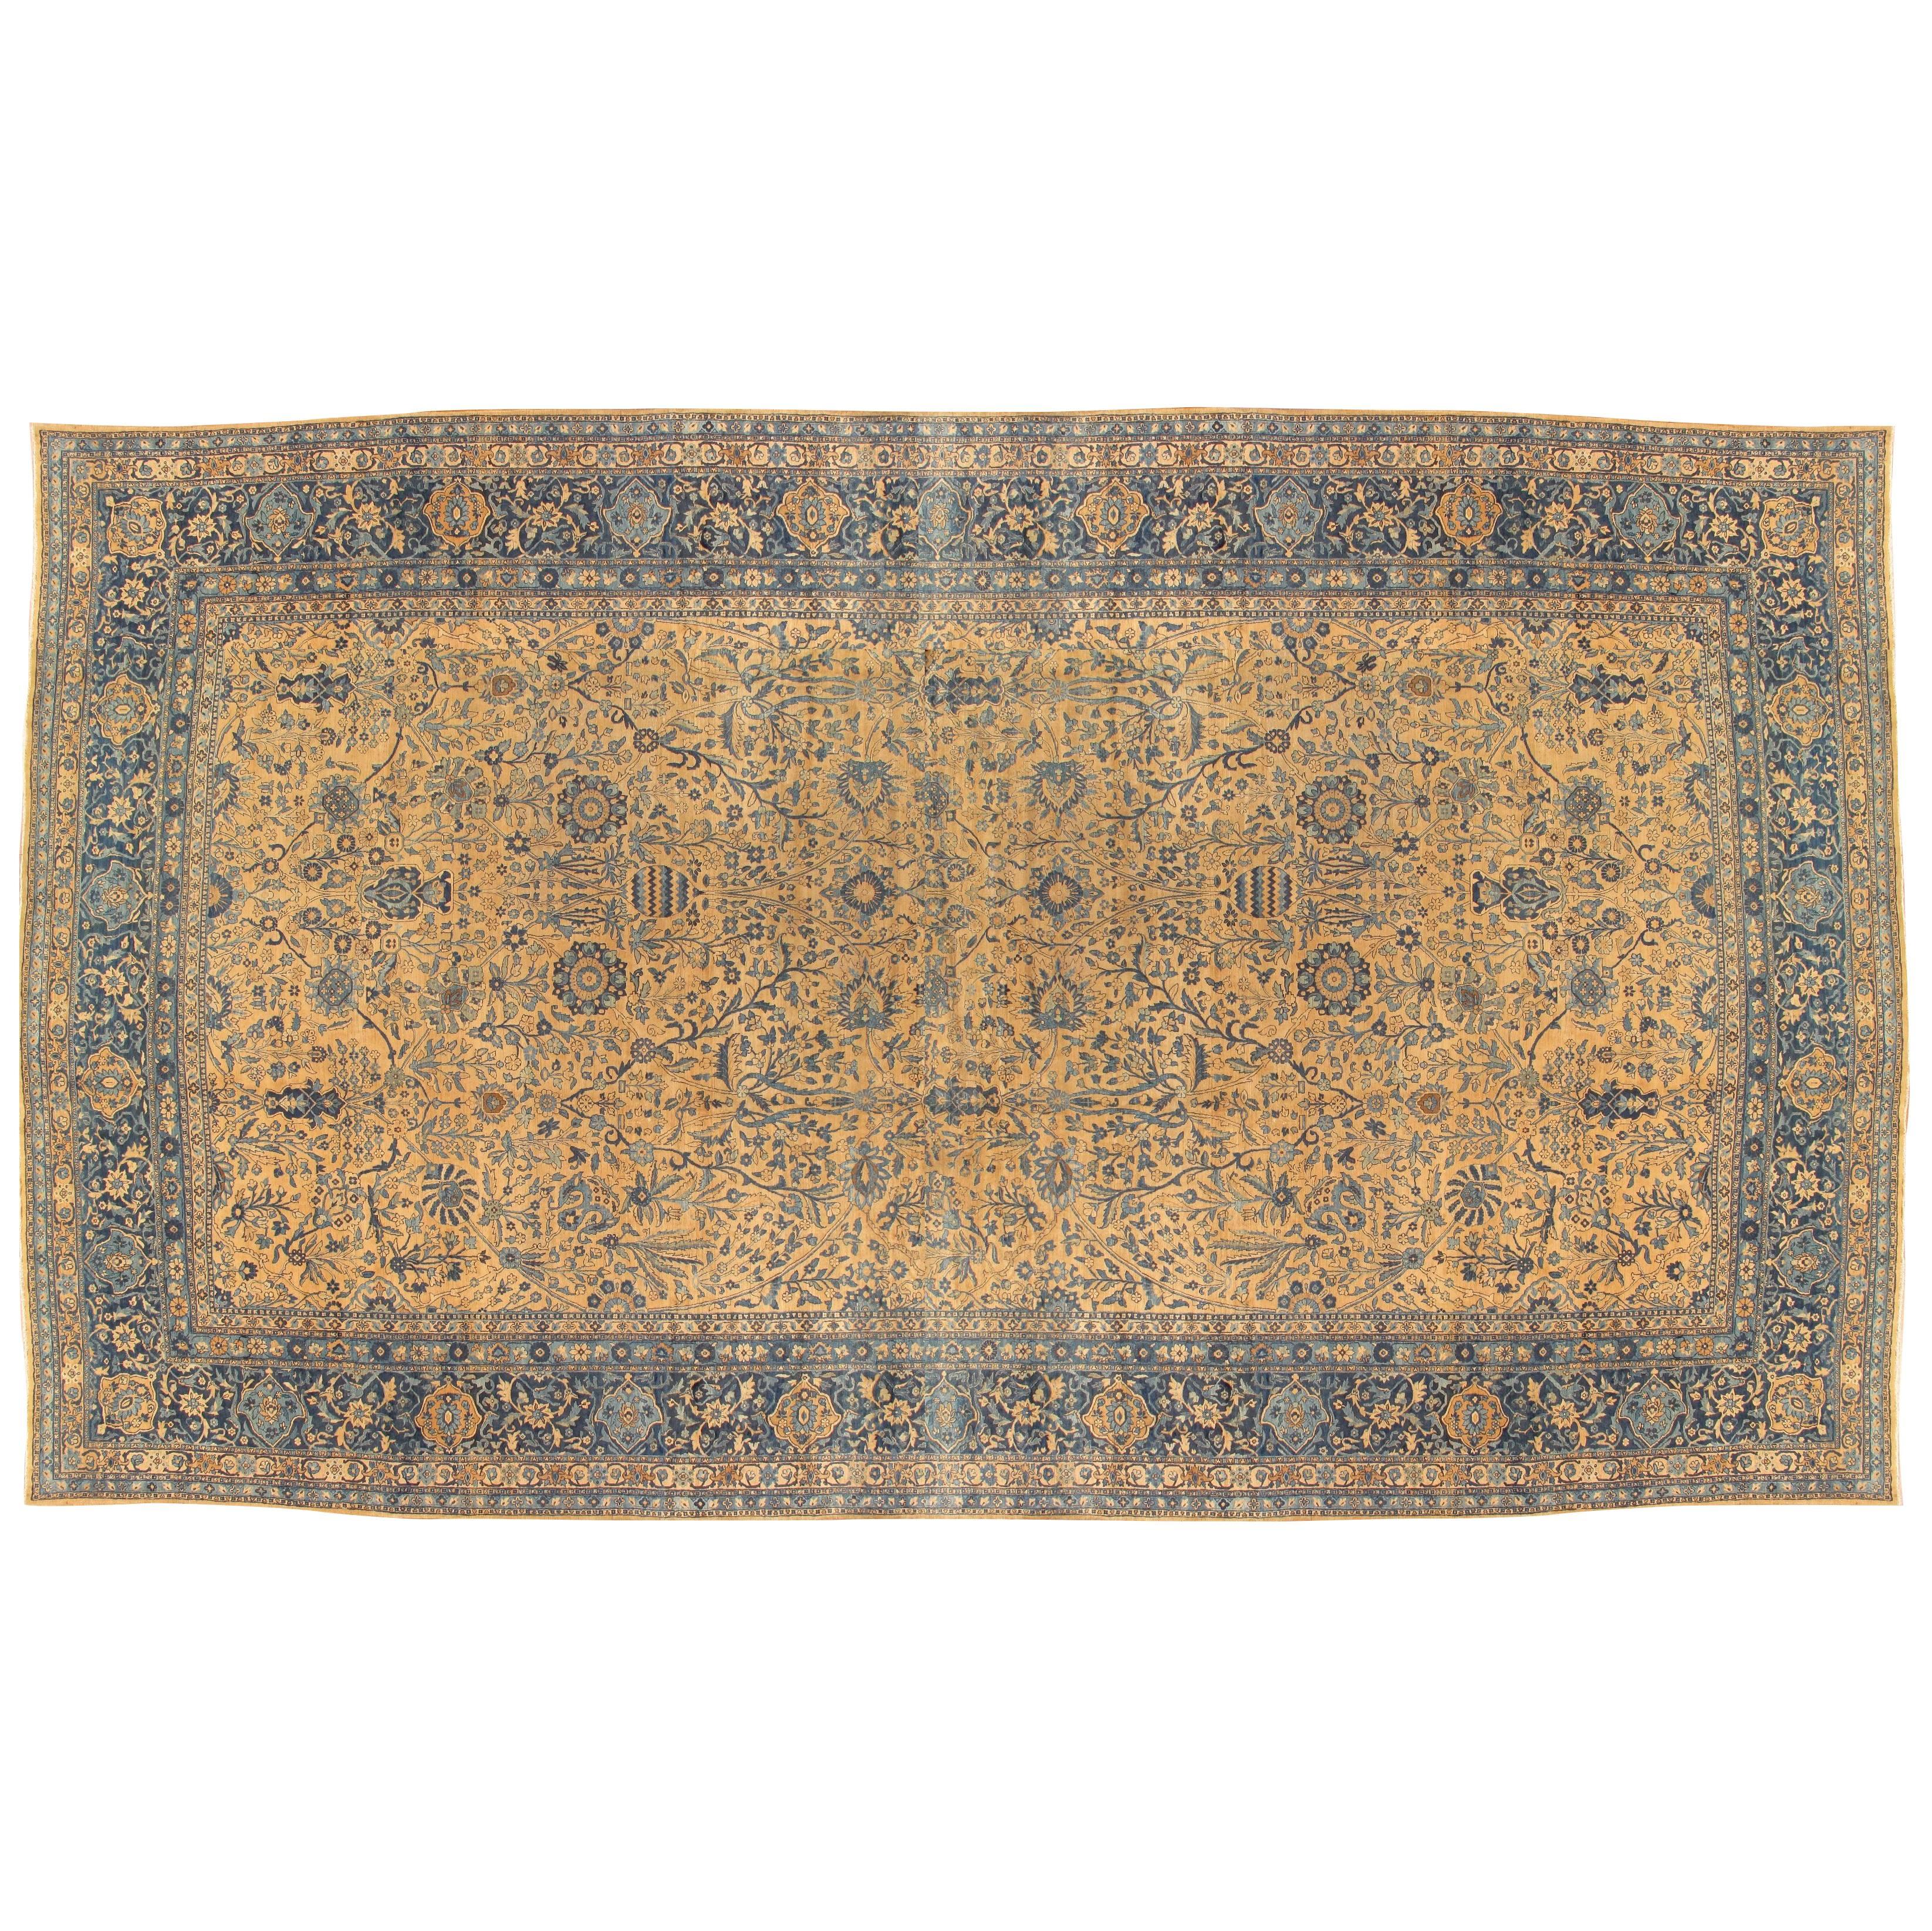 Antique Lavar Kerman Carpet, Fine Persian Oriental Rug Light Blue, Gold and Navy For Sale